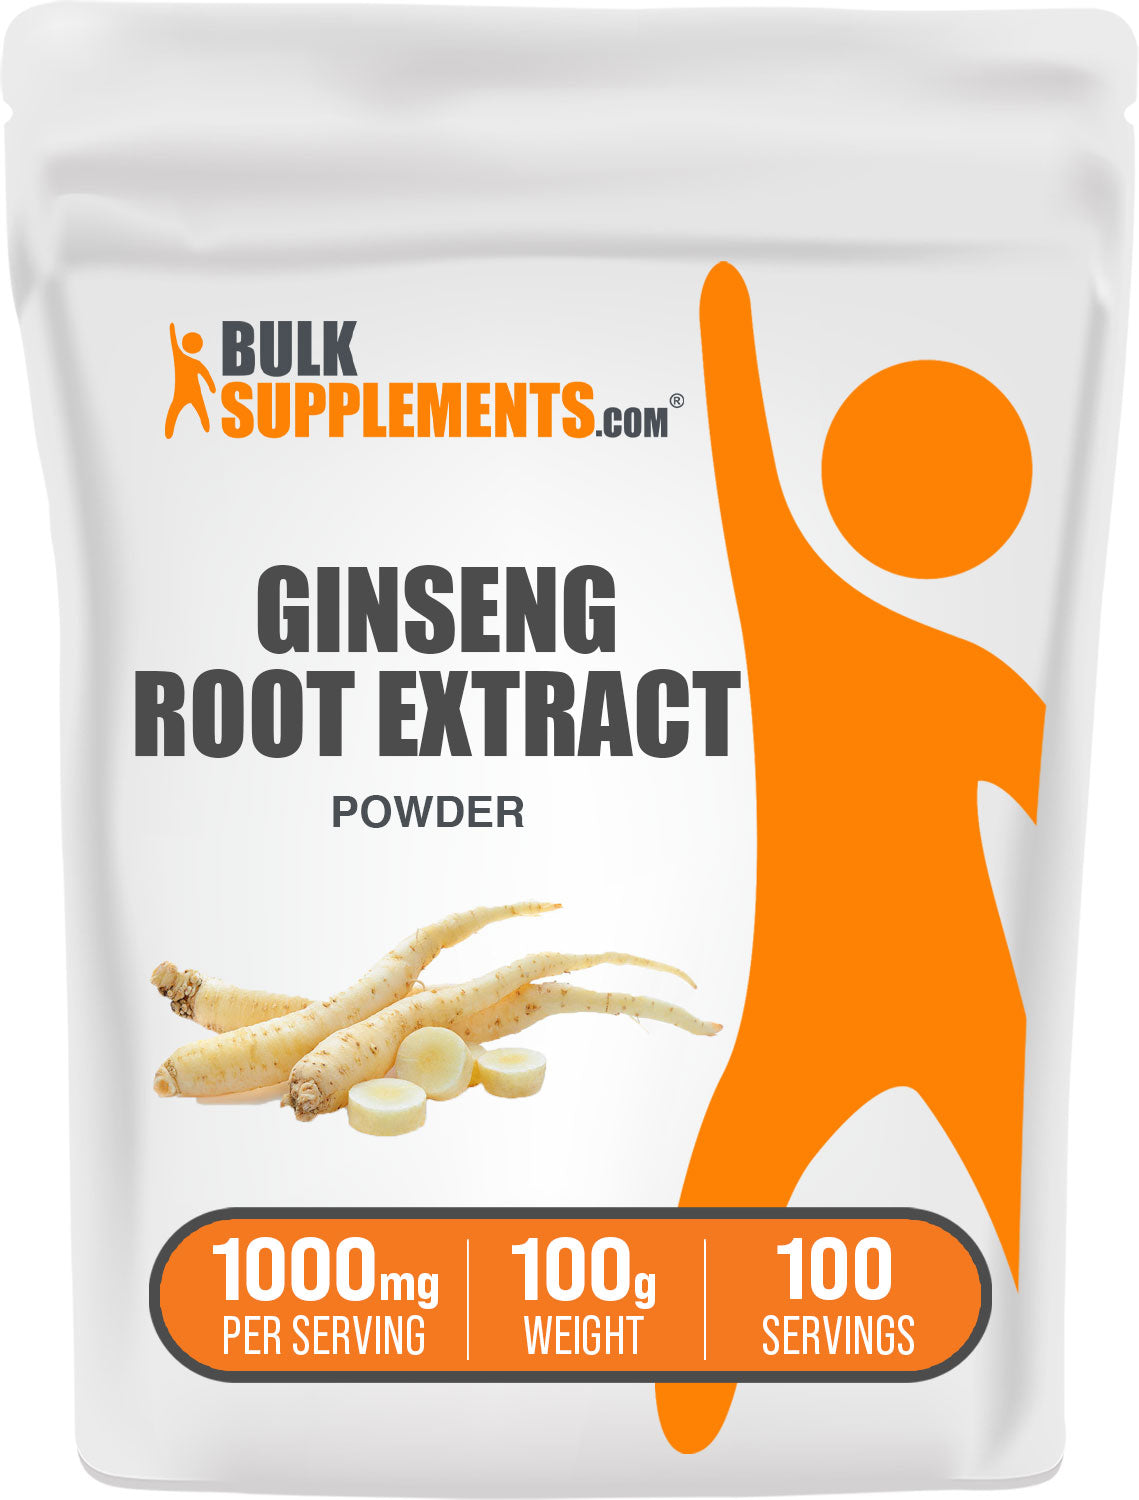 BulkSupplements.com Ginseng Root Extract powder 100g bag